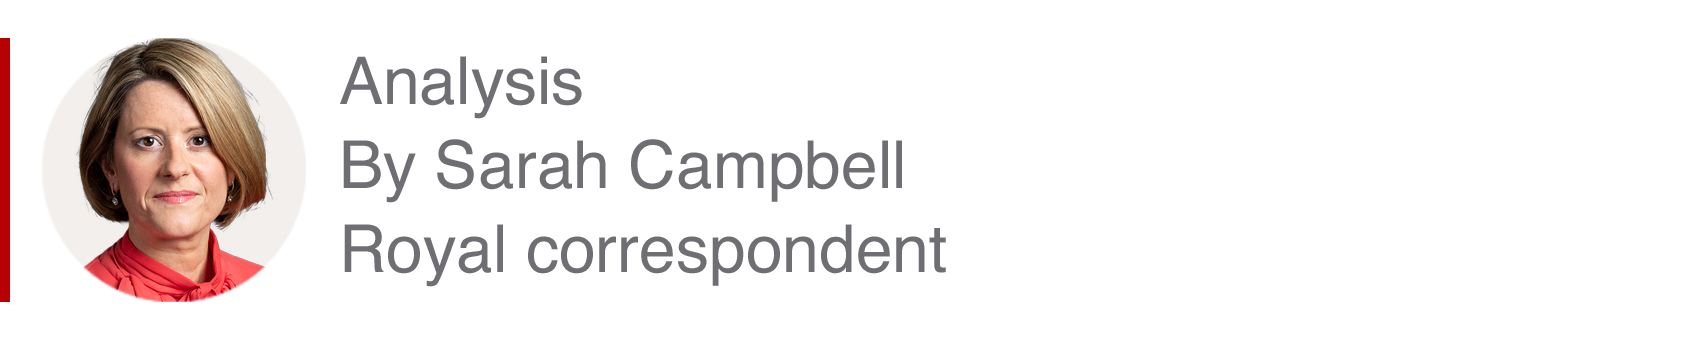 Analysis box by Sarah Campbell, Royal correspondent